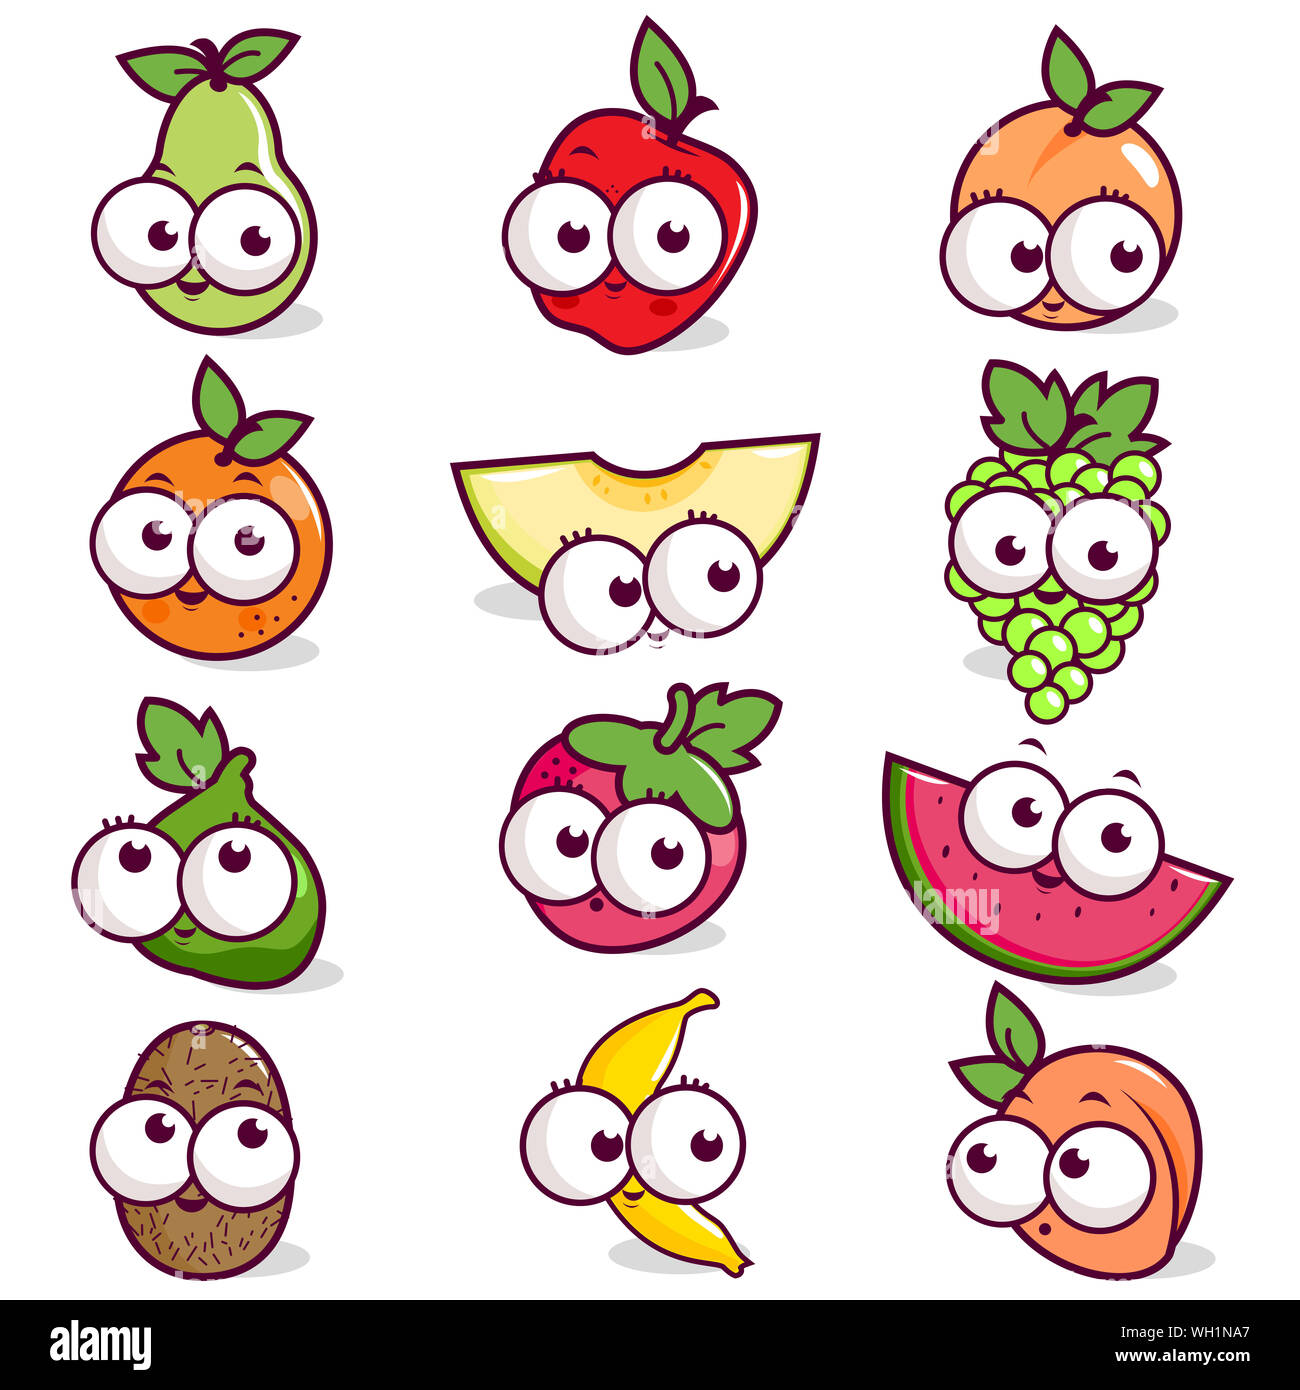 Illustrazione serie di cartoon i caratteri di frutta. Foto Stock